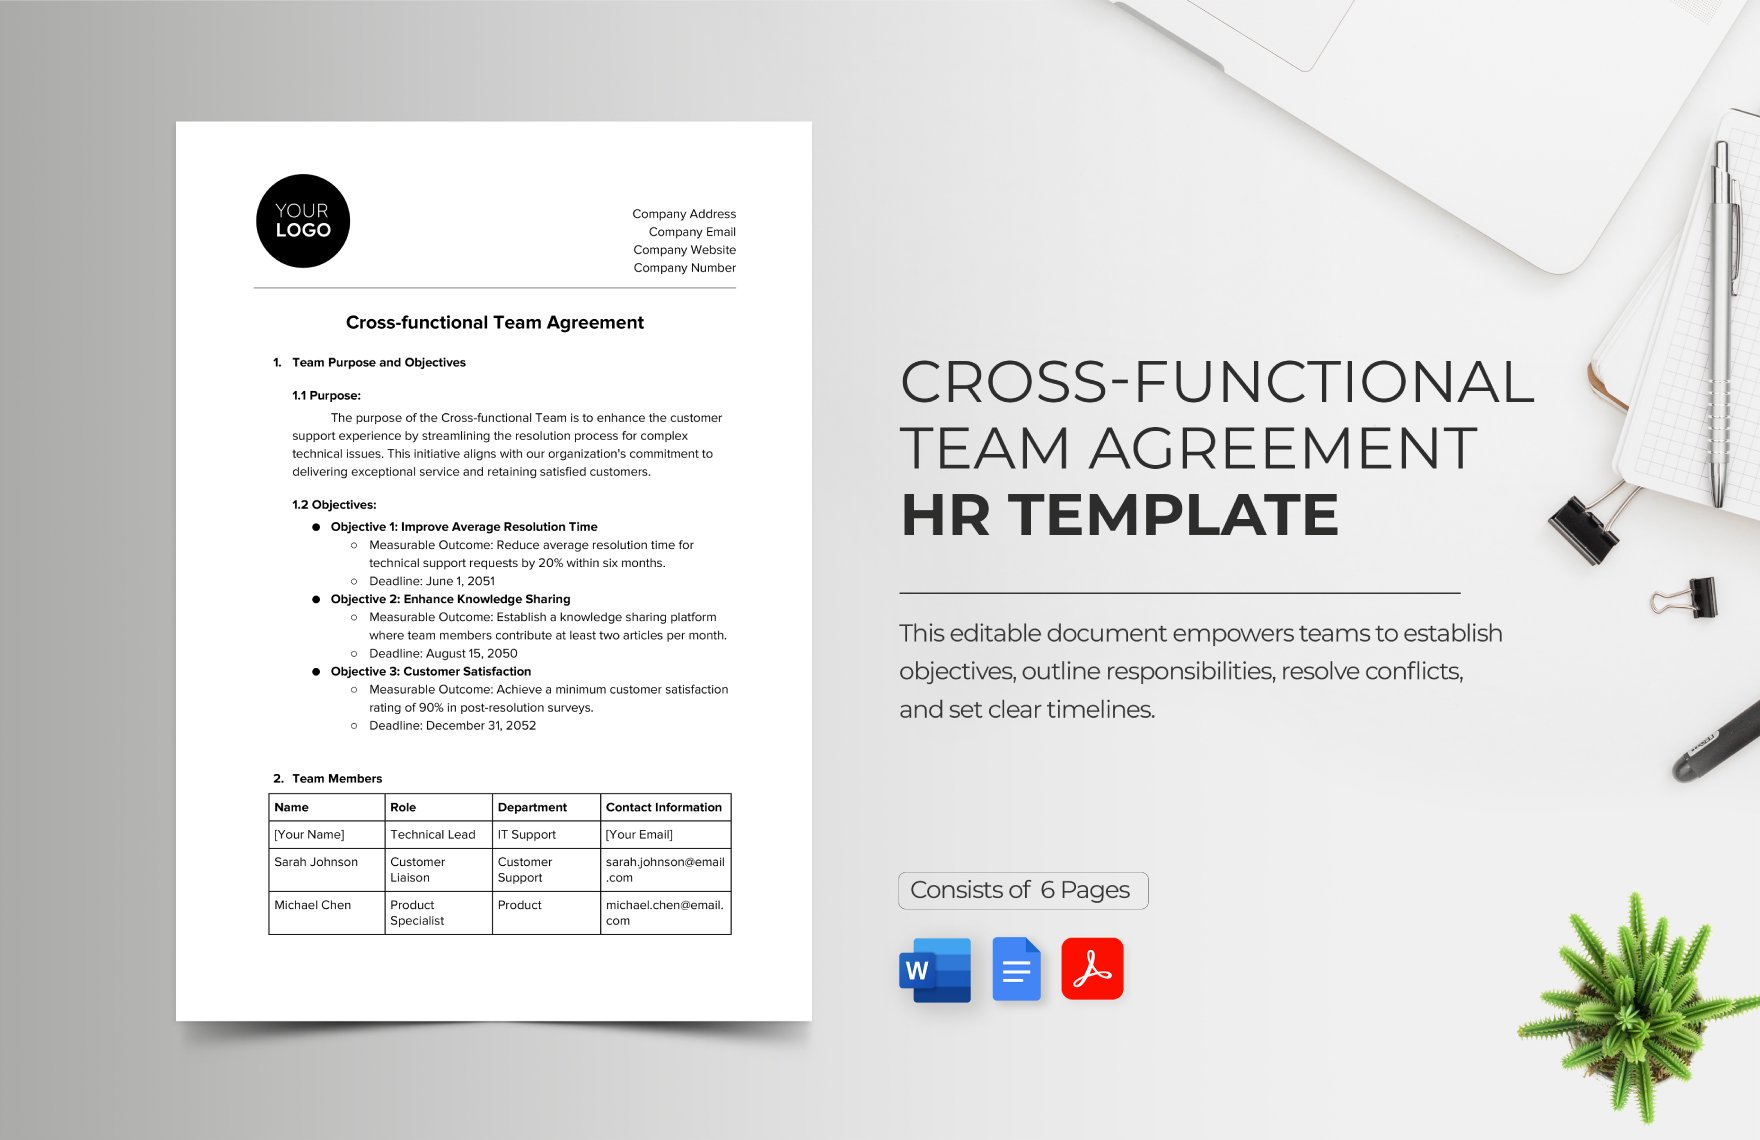 Cross-functional Team Agreement HR Template in Word, Google Docs, PDF